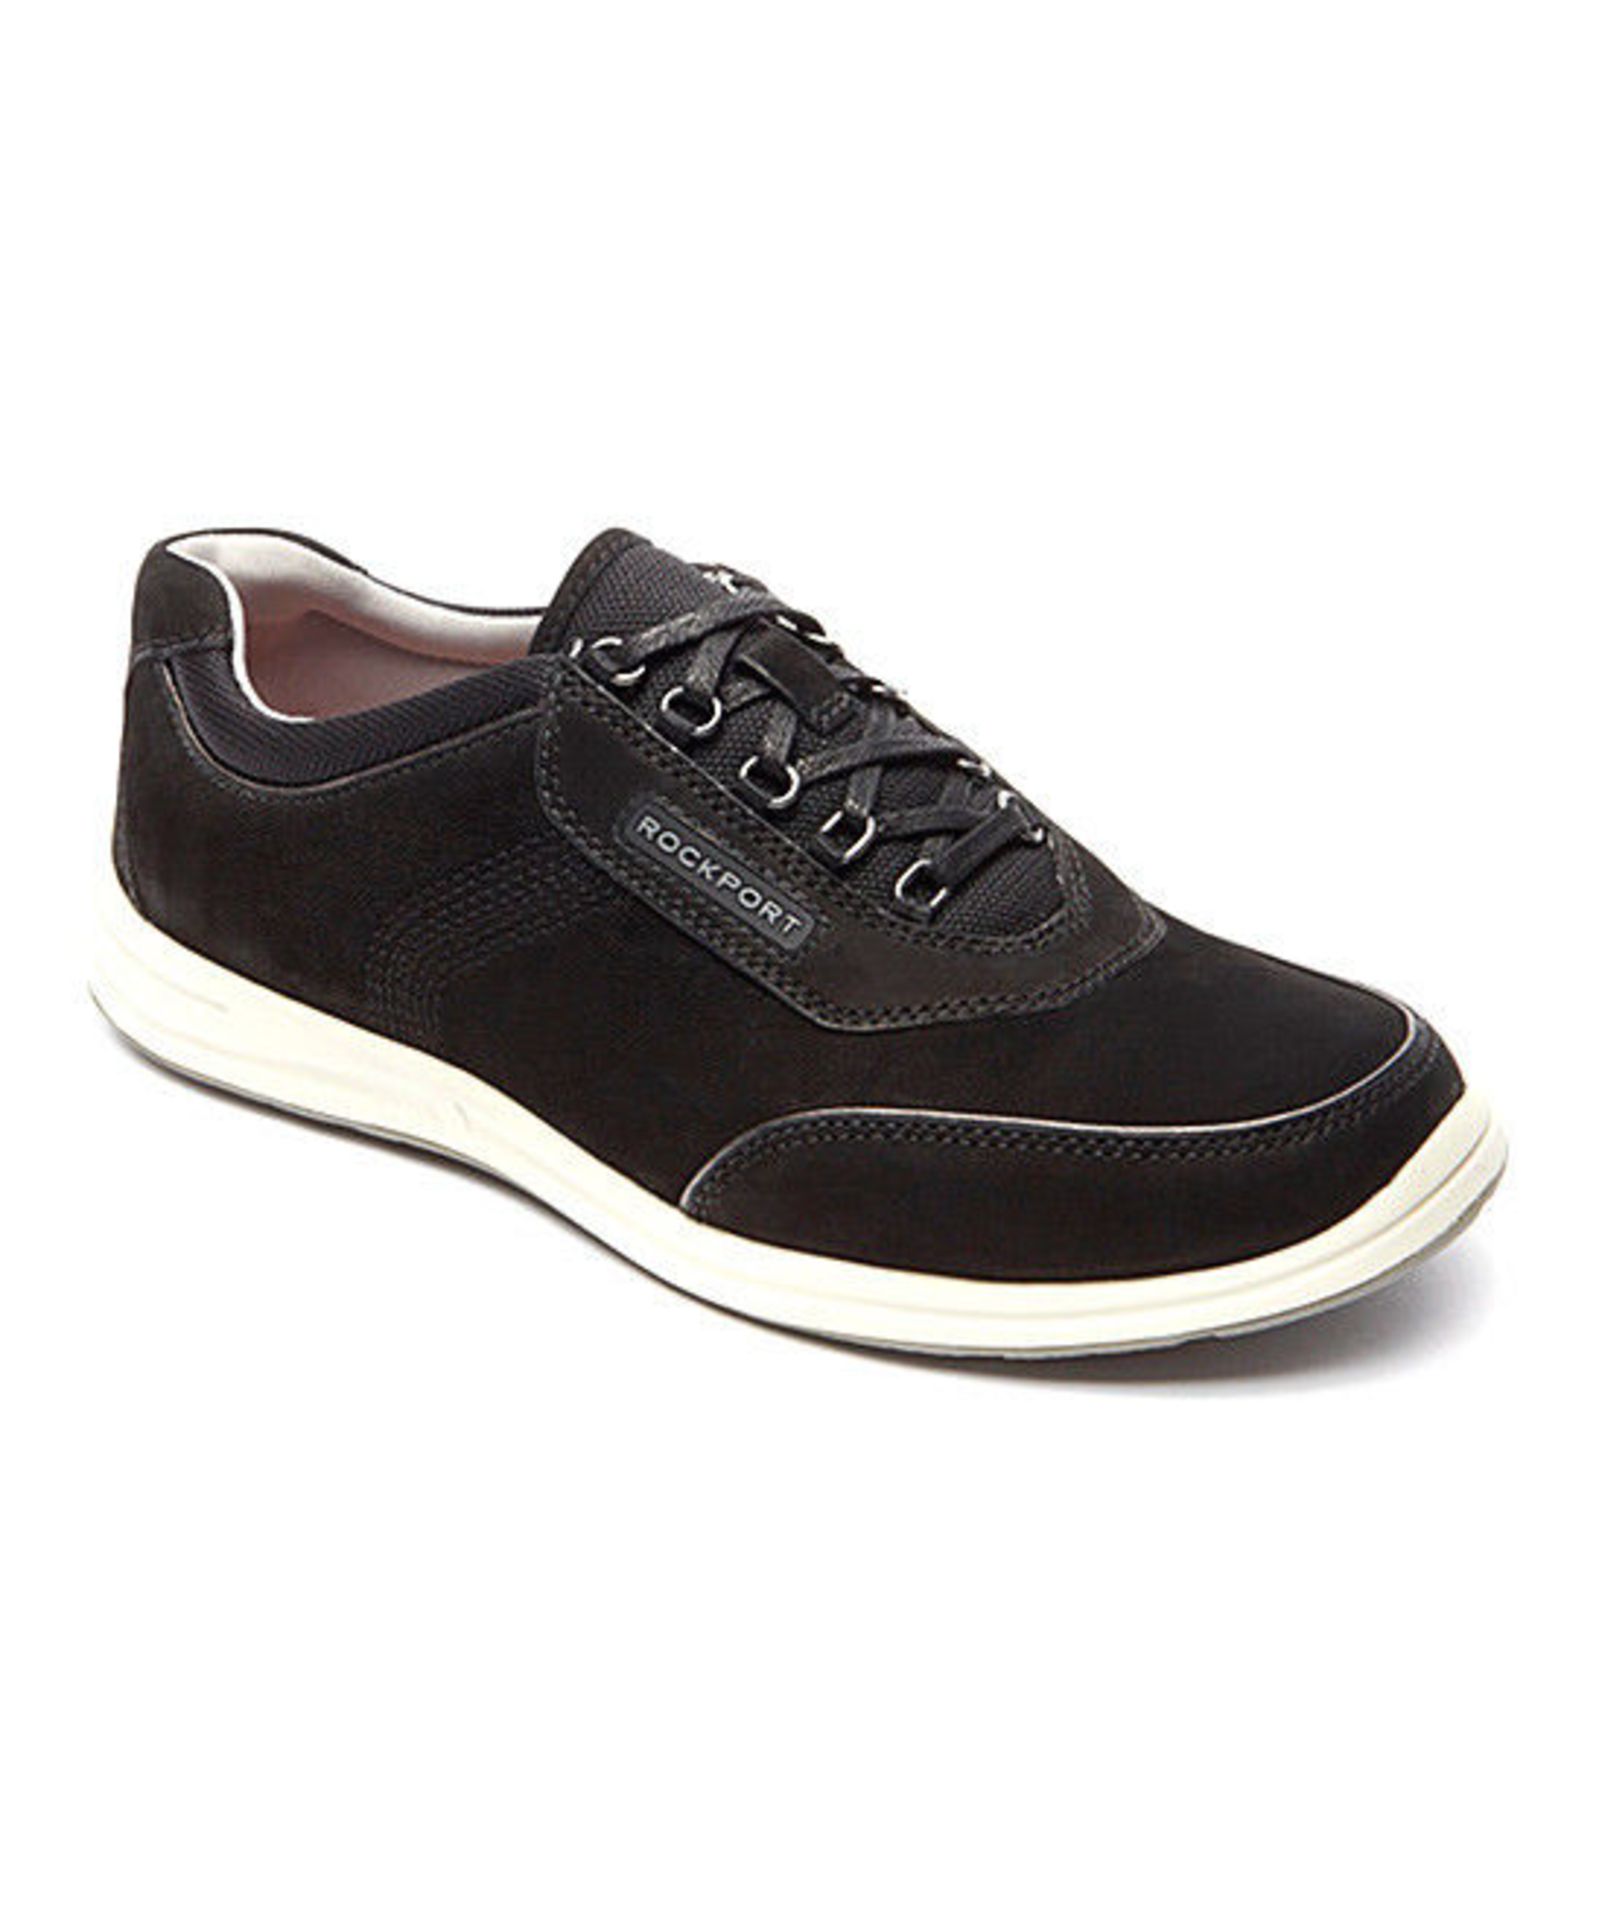 Rockport Black Wingtip Mudguard Nubuck Leather Sneaker (Uk Size 6.5:Us Size 9) (New with box) [